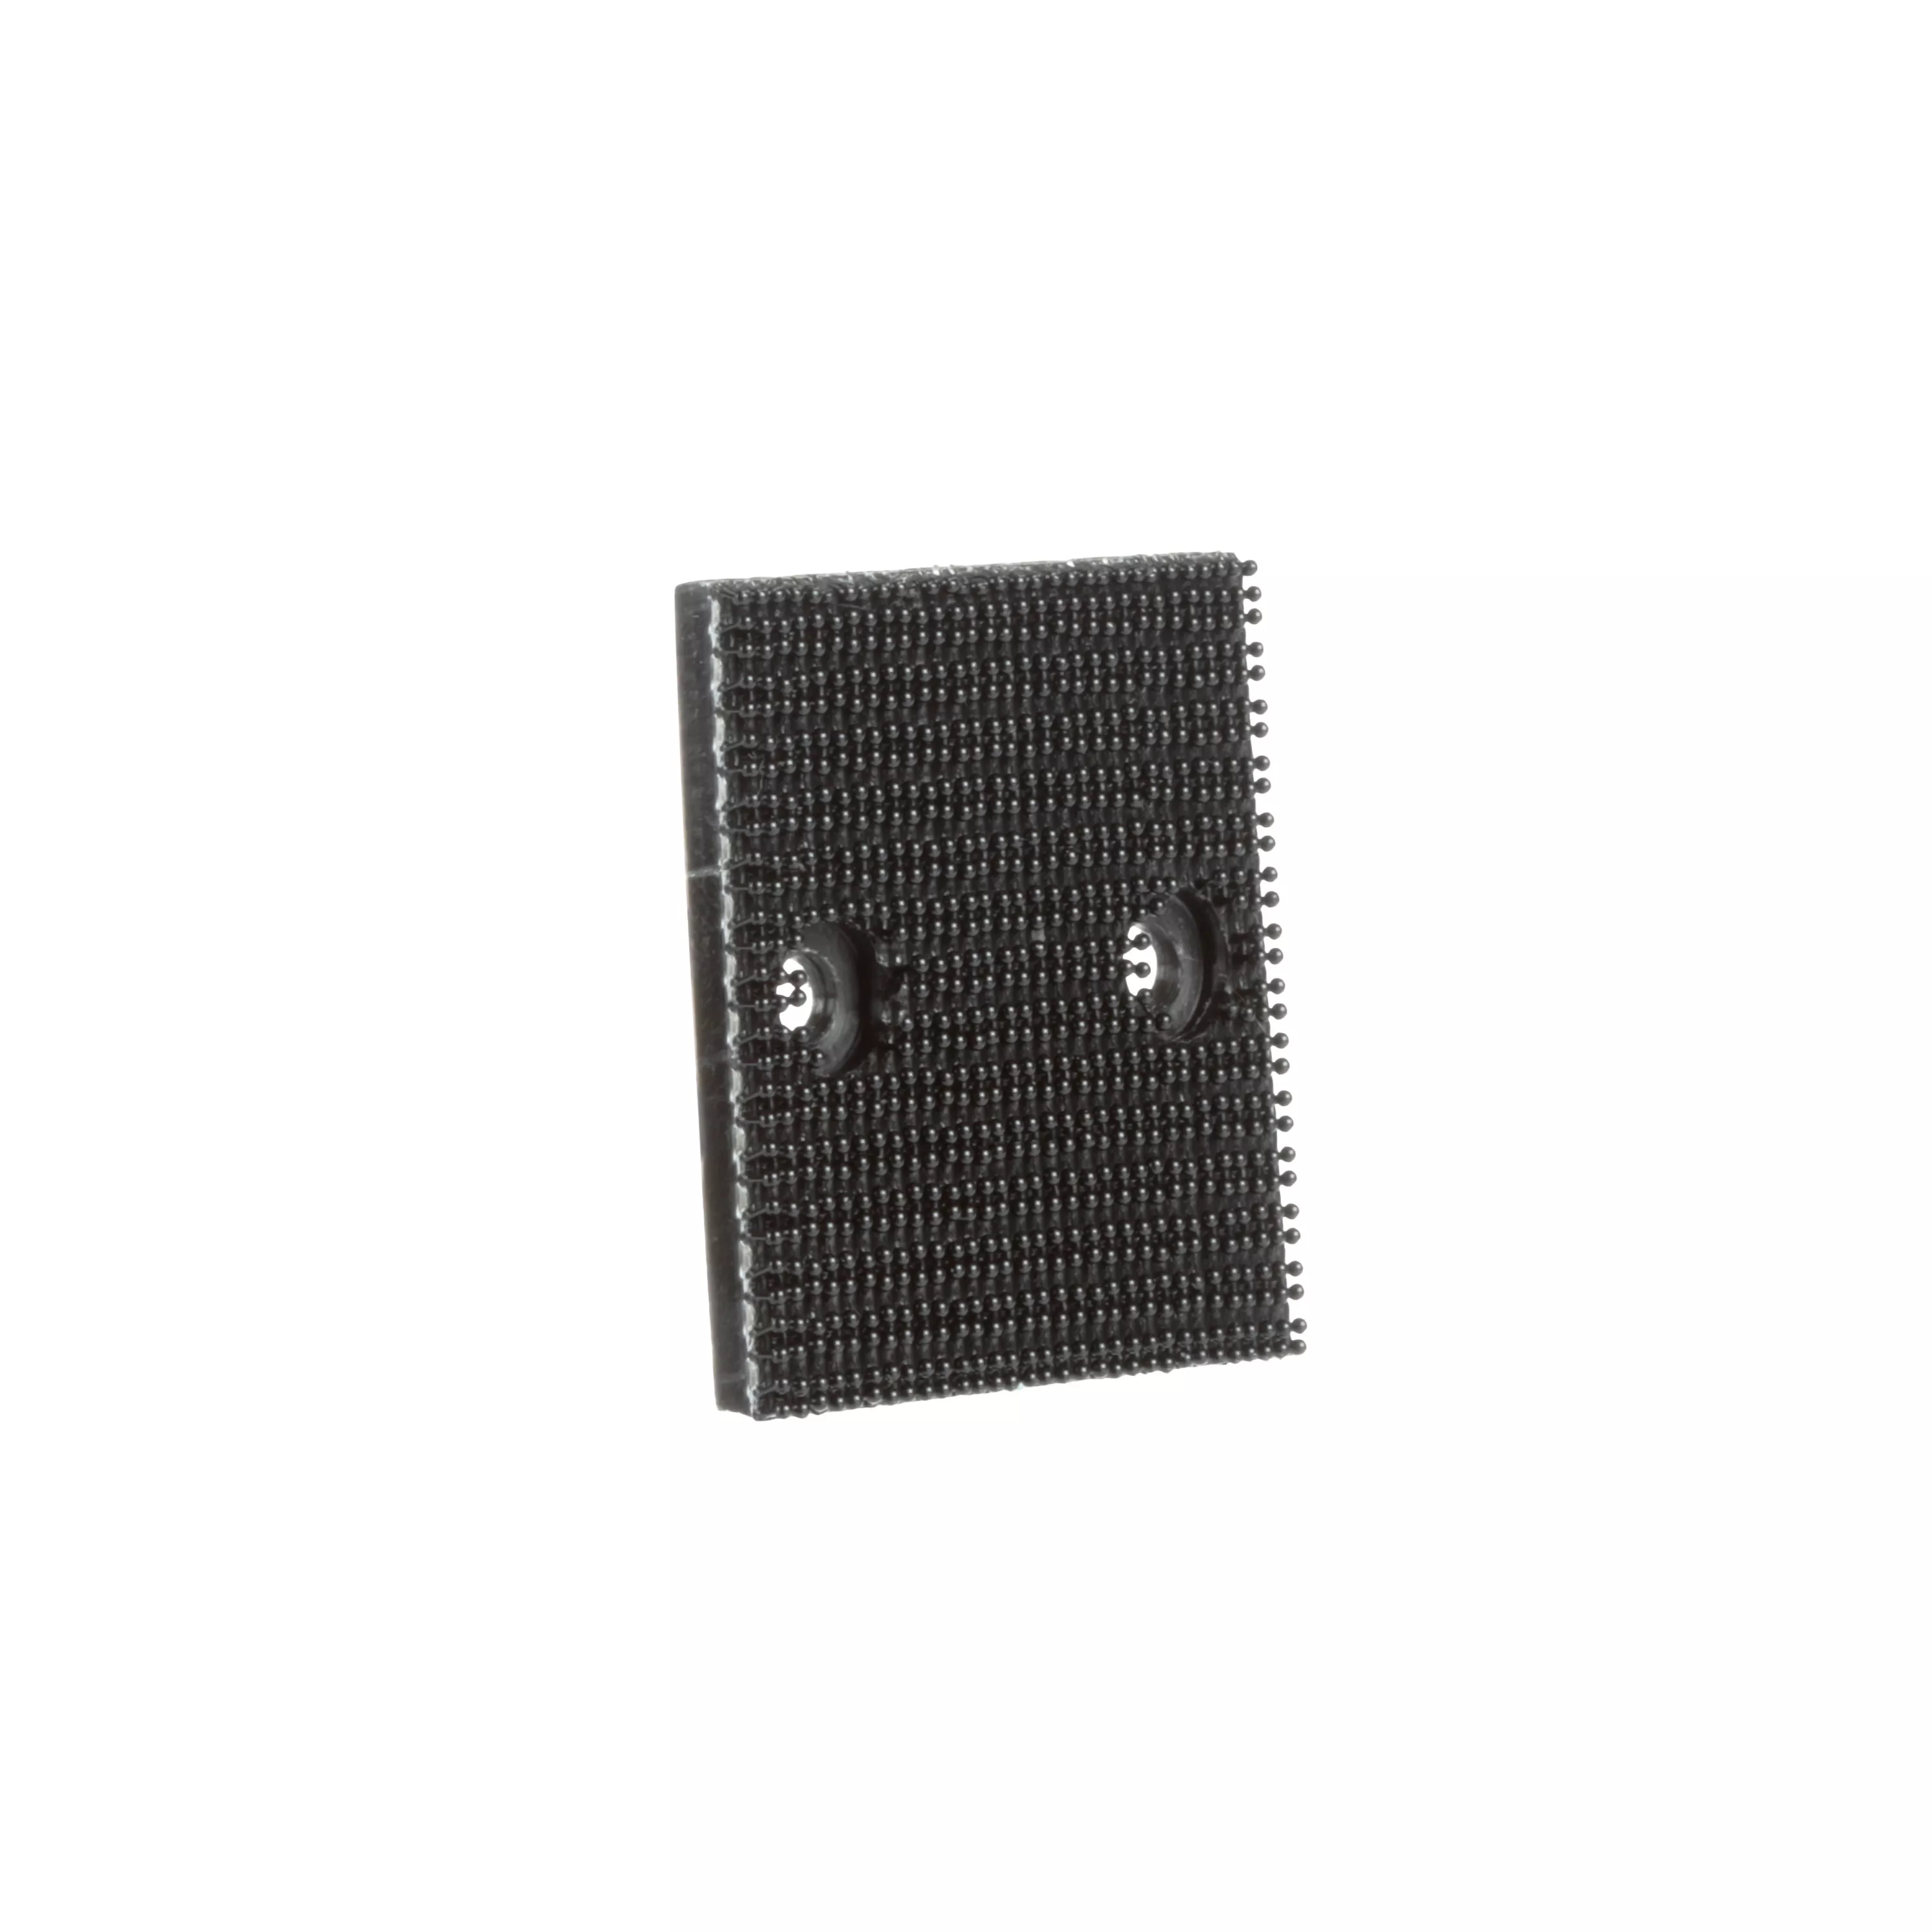 3M™ Dual Lock™ Reclosable Fastener SJ3767, Stem Density 400, Black, 15
in, 1000 Piece/Case. Die Cut